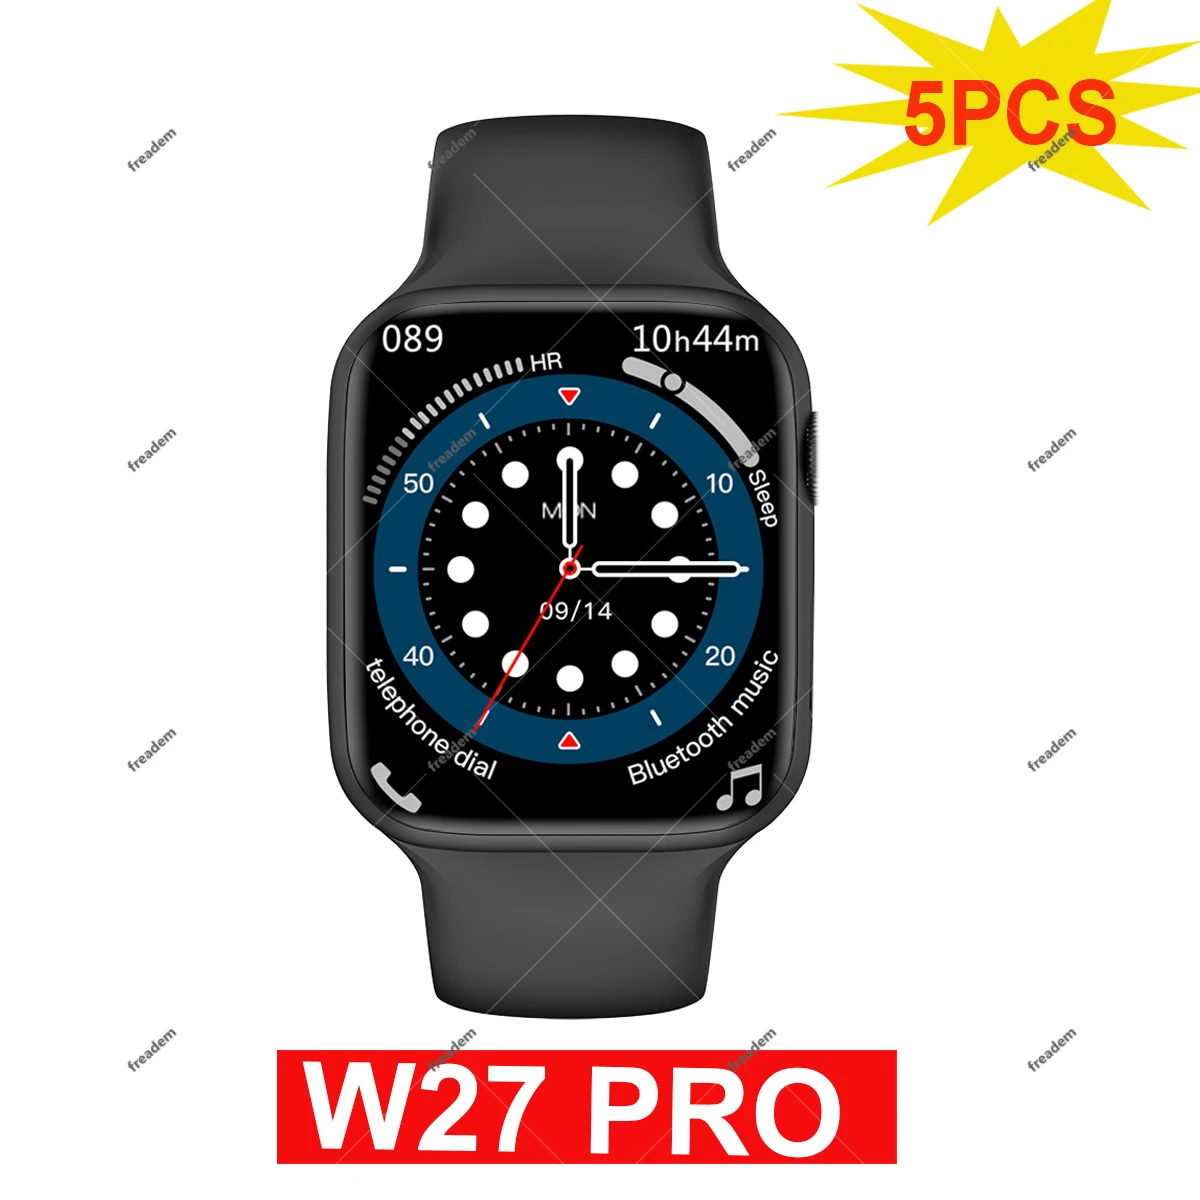 5PCS W27 PRO Smart Watch